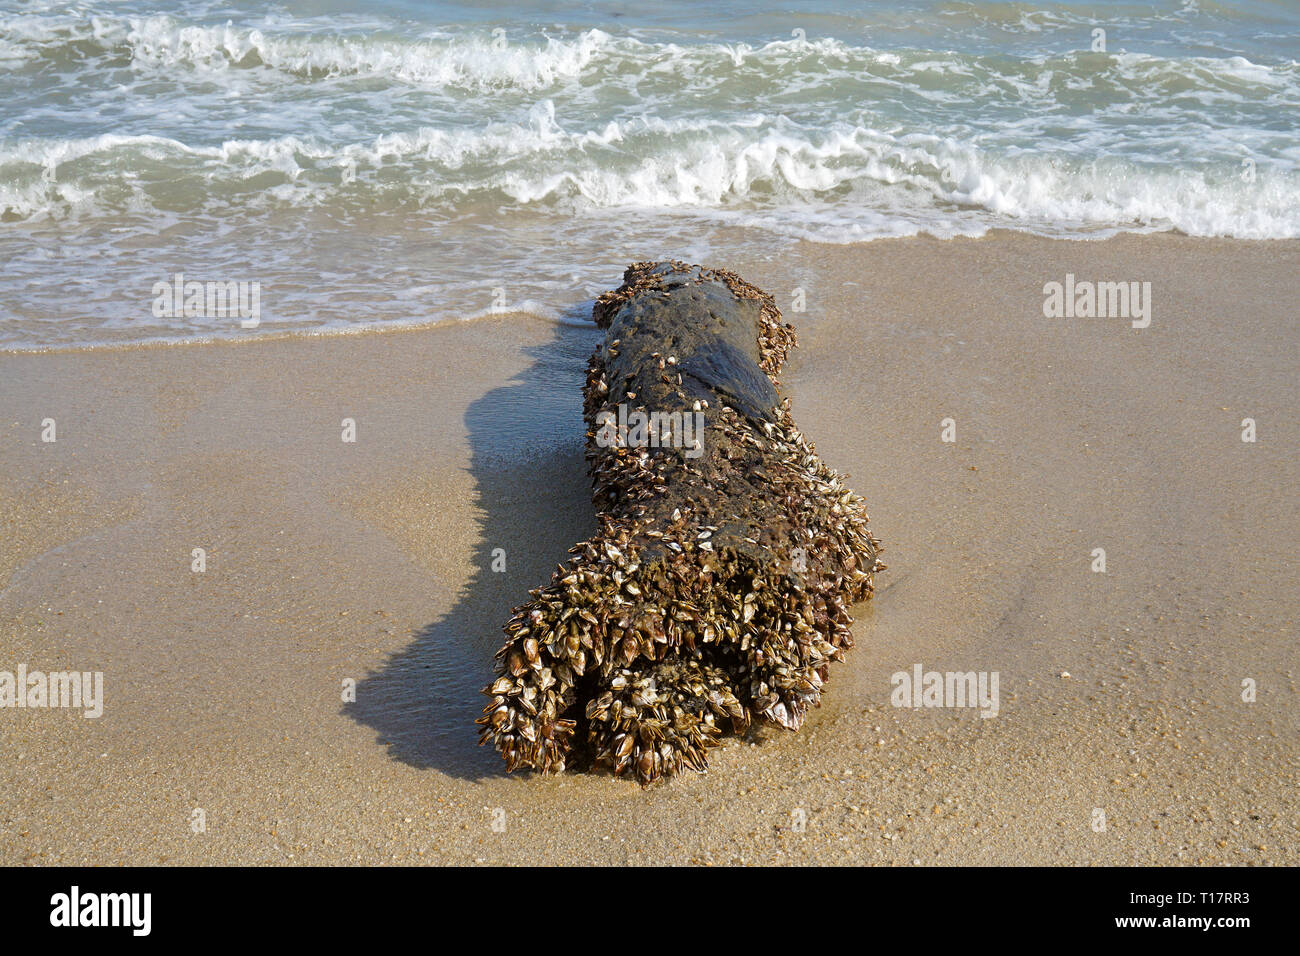 Goose cirripedi (Pedunculata) ricoperta di una lavata fino tronco, Lamai Beach, Koh Samui, Golfo di Thailandia, Tailandia Foto Stock